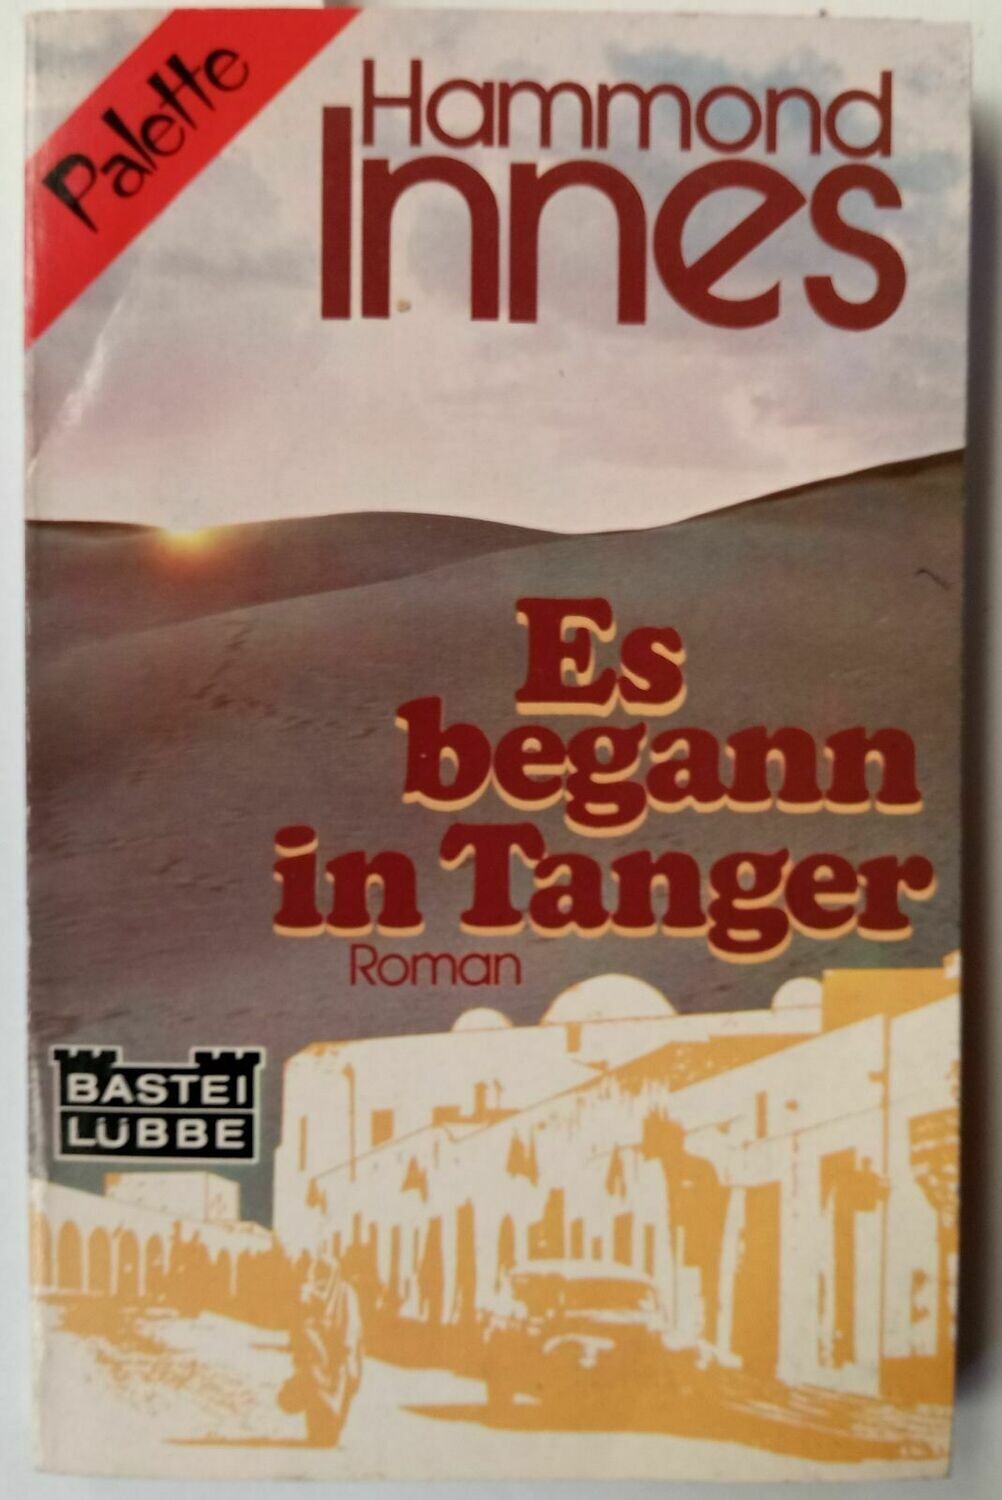 Libro ed. Tedesca - Es begann in Tanger di Hammond Innes